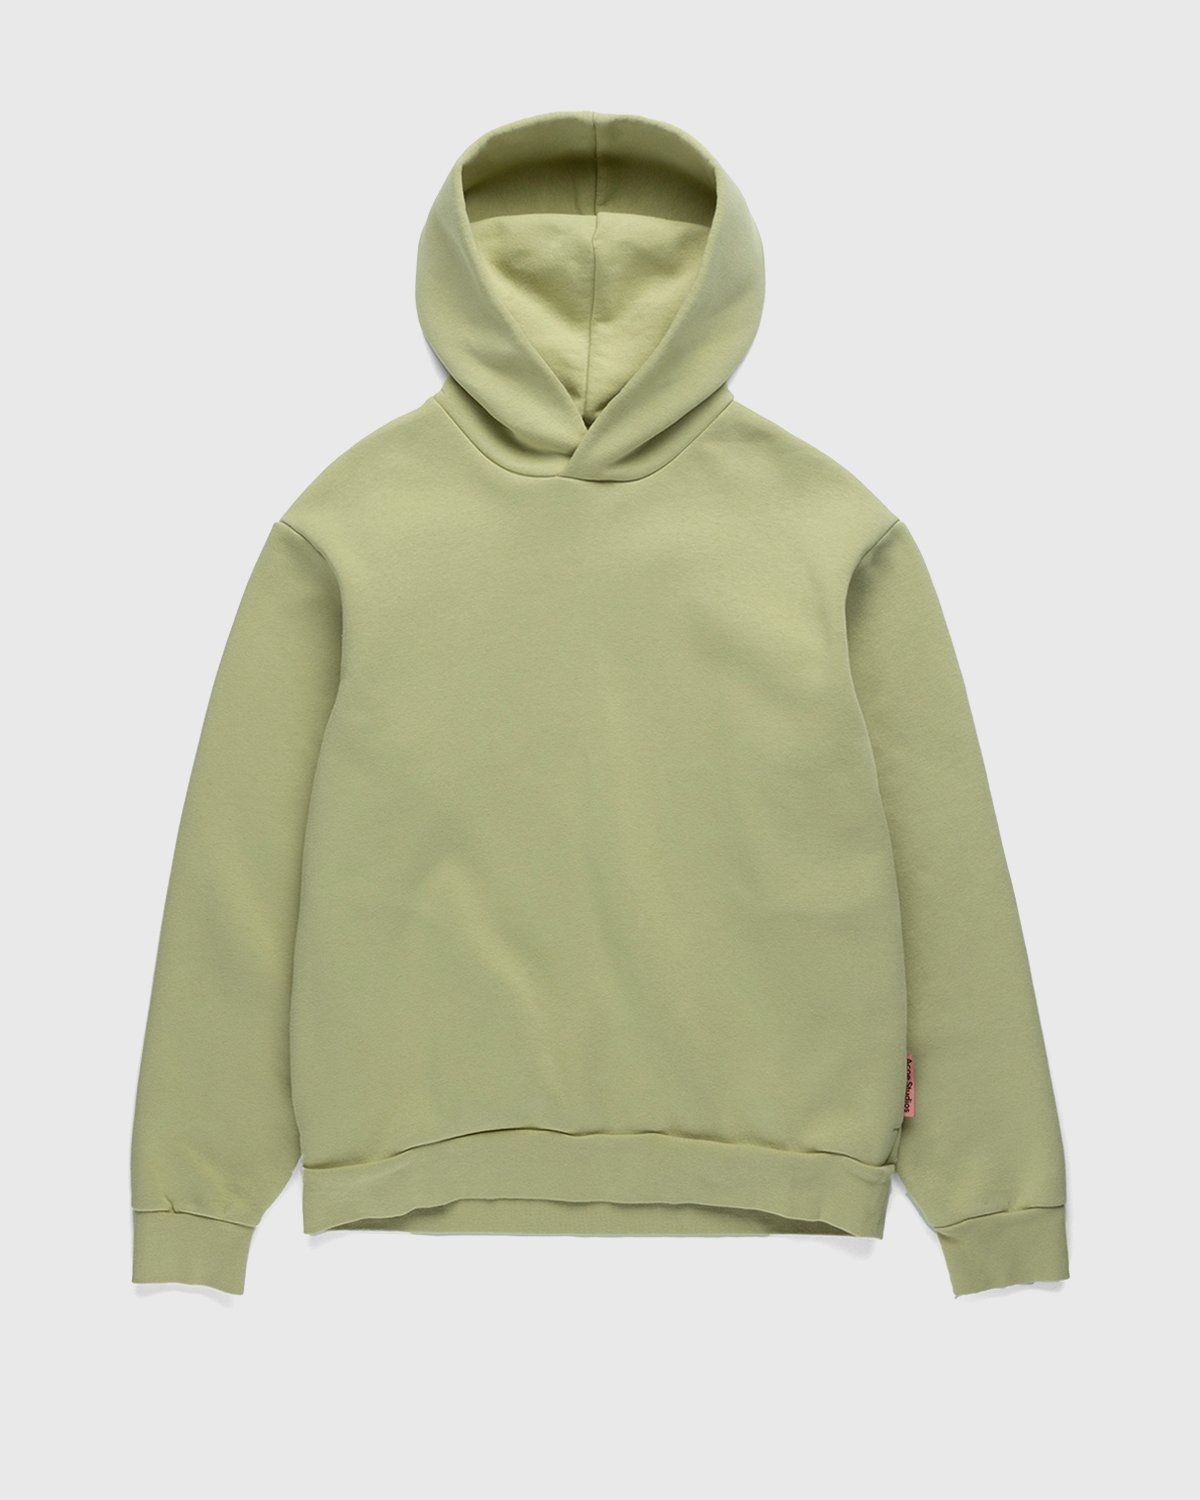 Acne Studios – Midweight Fleece Hooded Sweatshirt Pale Green - Image 1